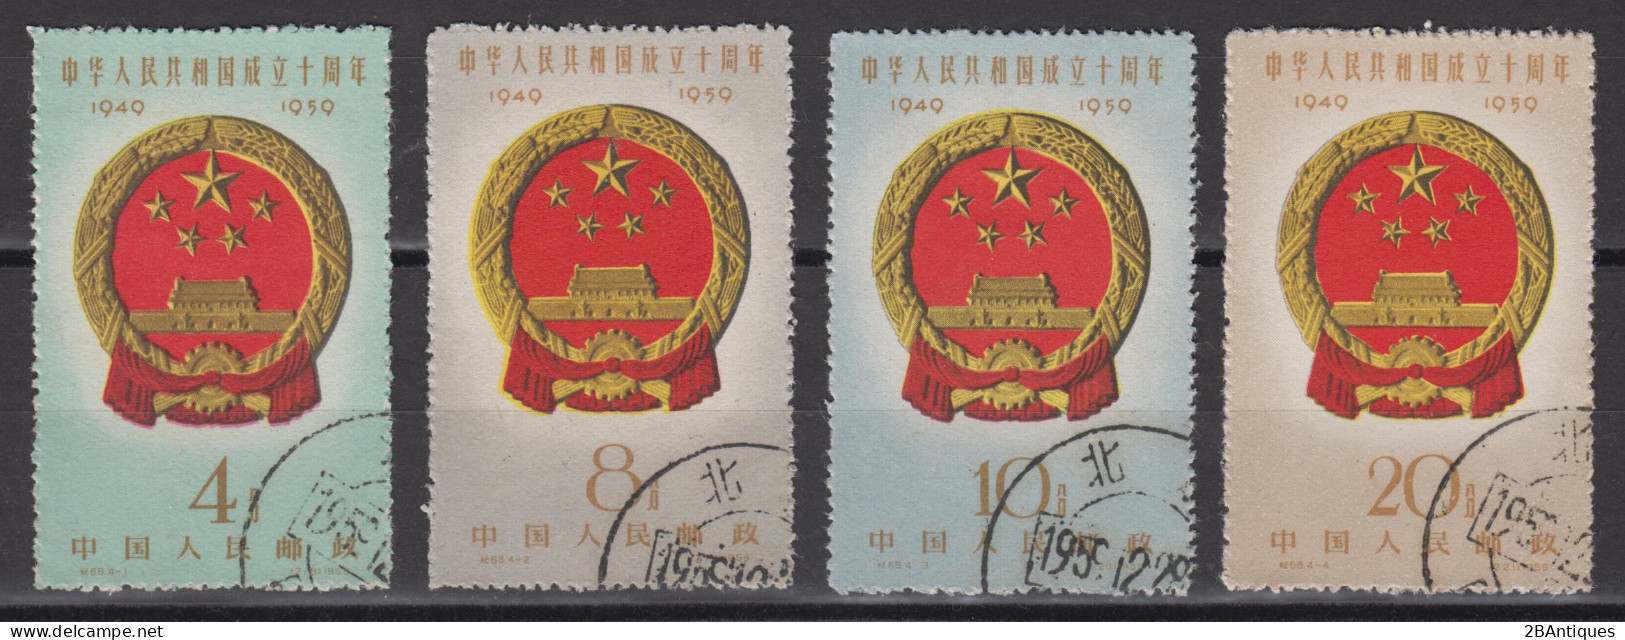 PR CHINA 1959 - The 10th Anniversary Of People's Republic CTO XF - Gebraucht